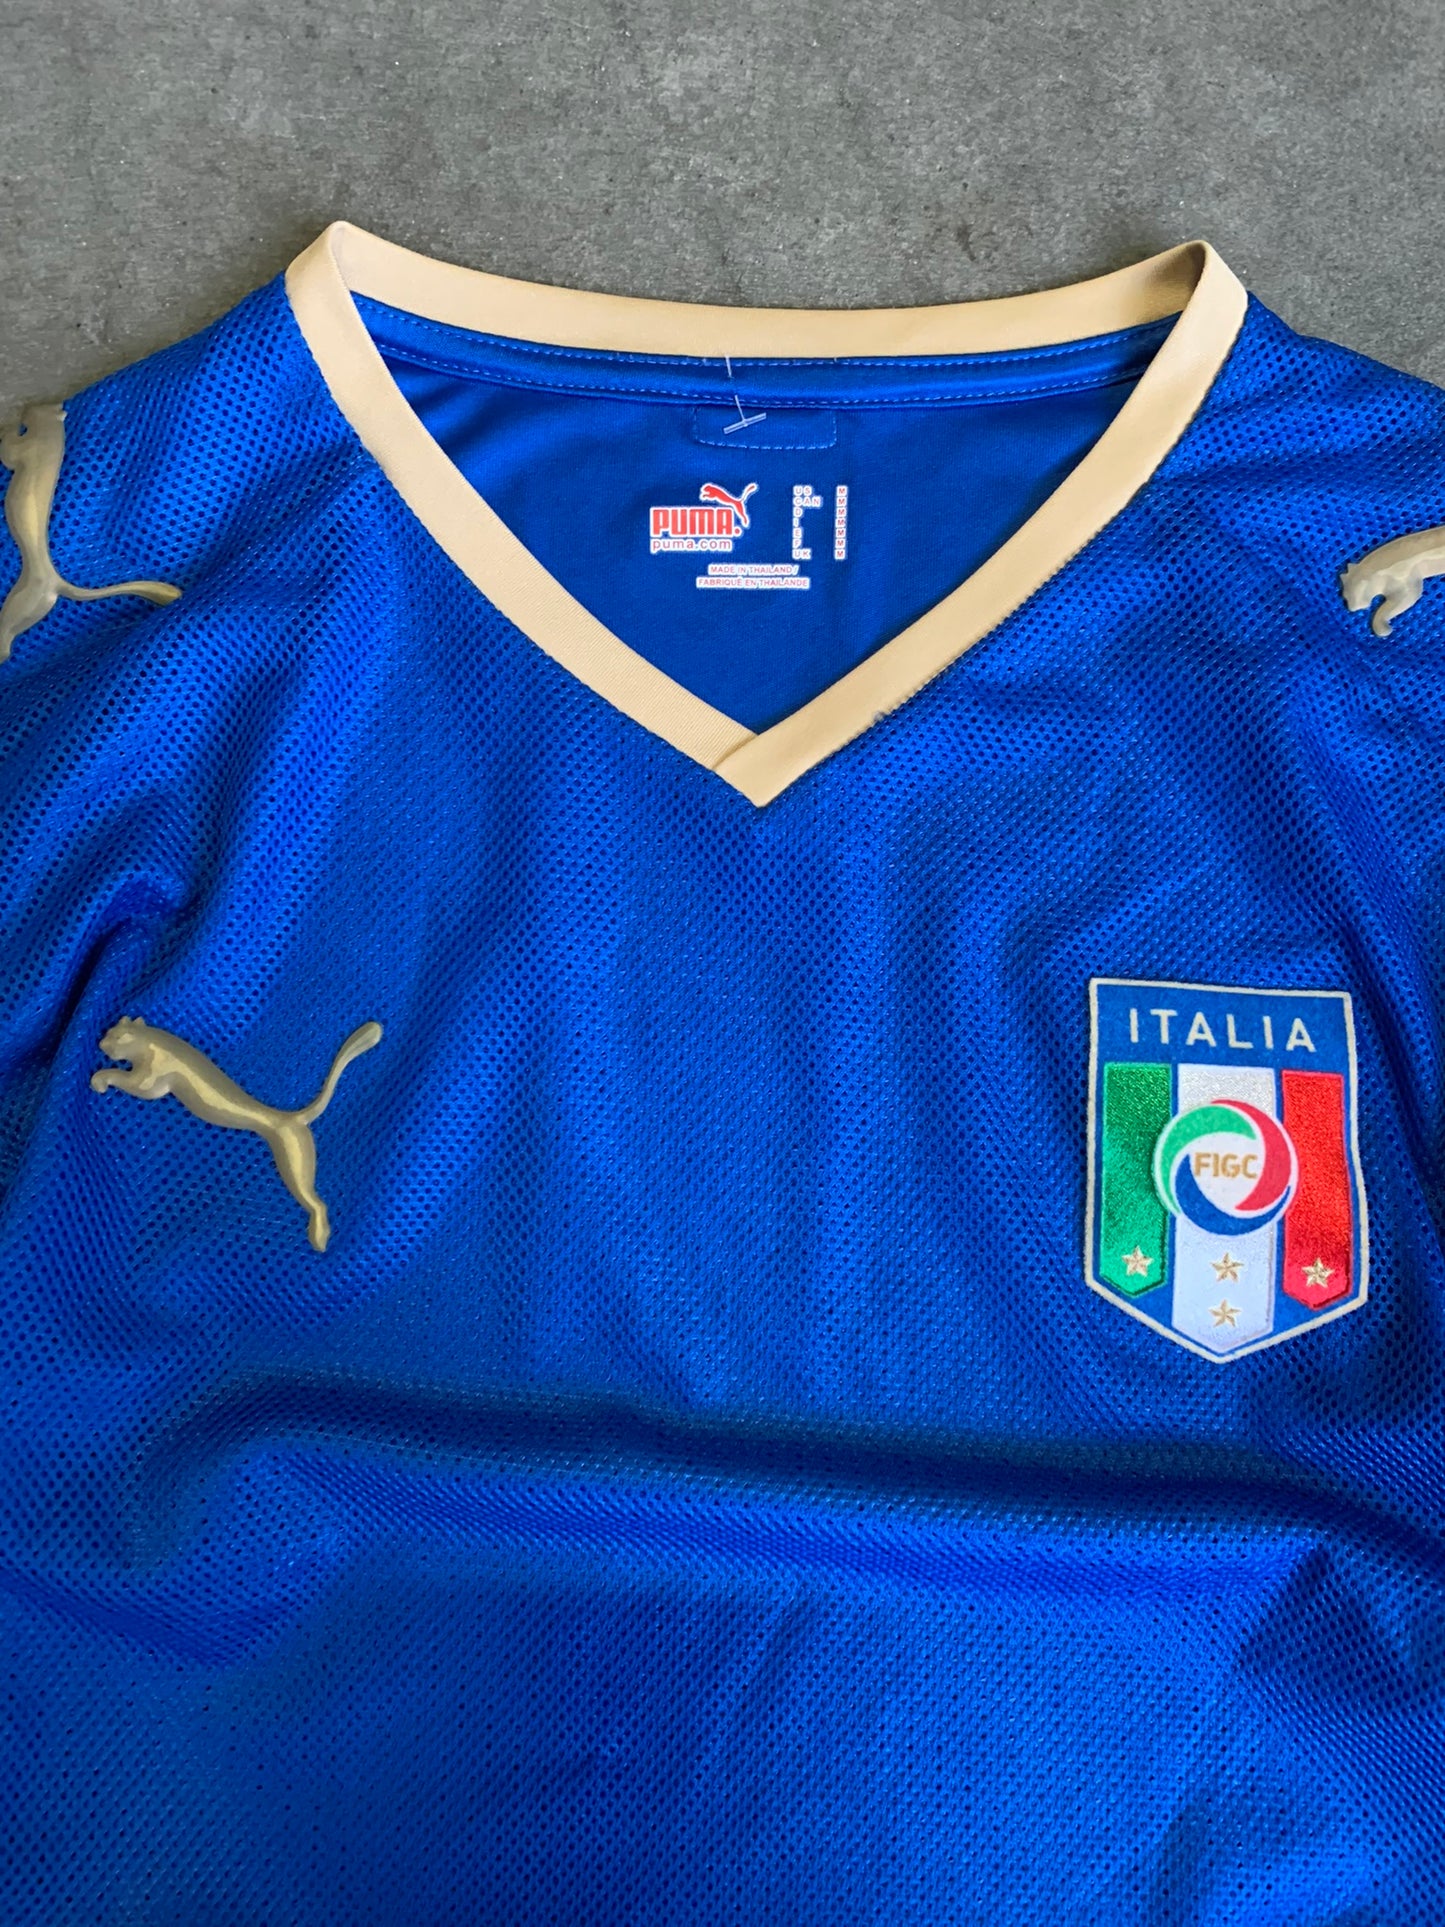 (M/L) Puma Italy National Kit